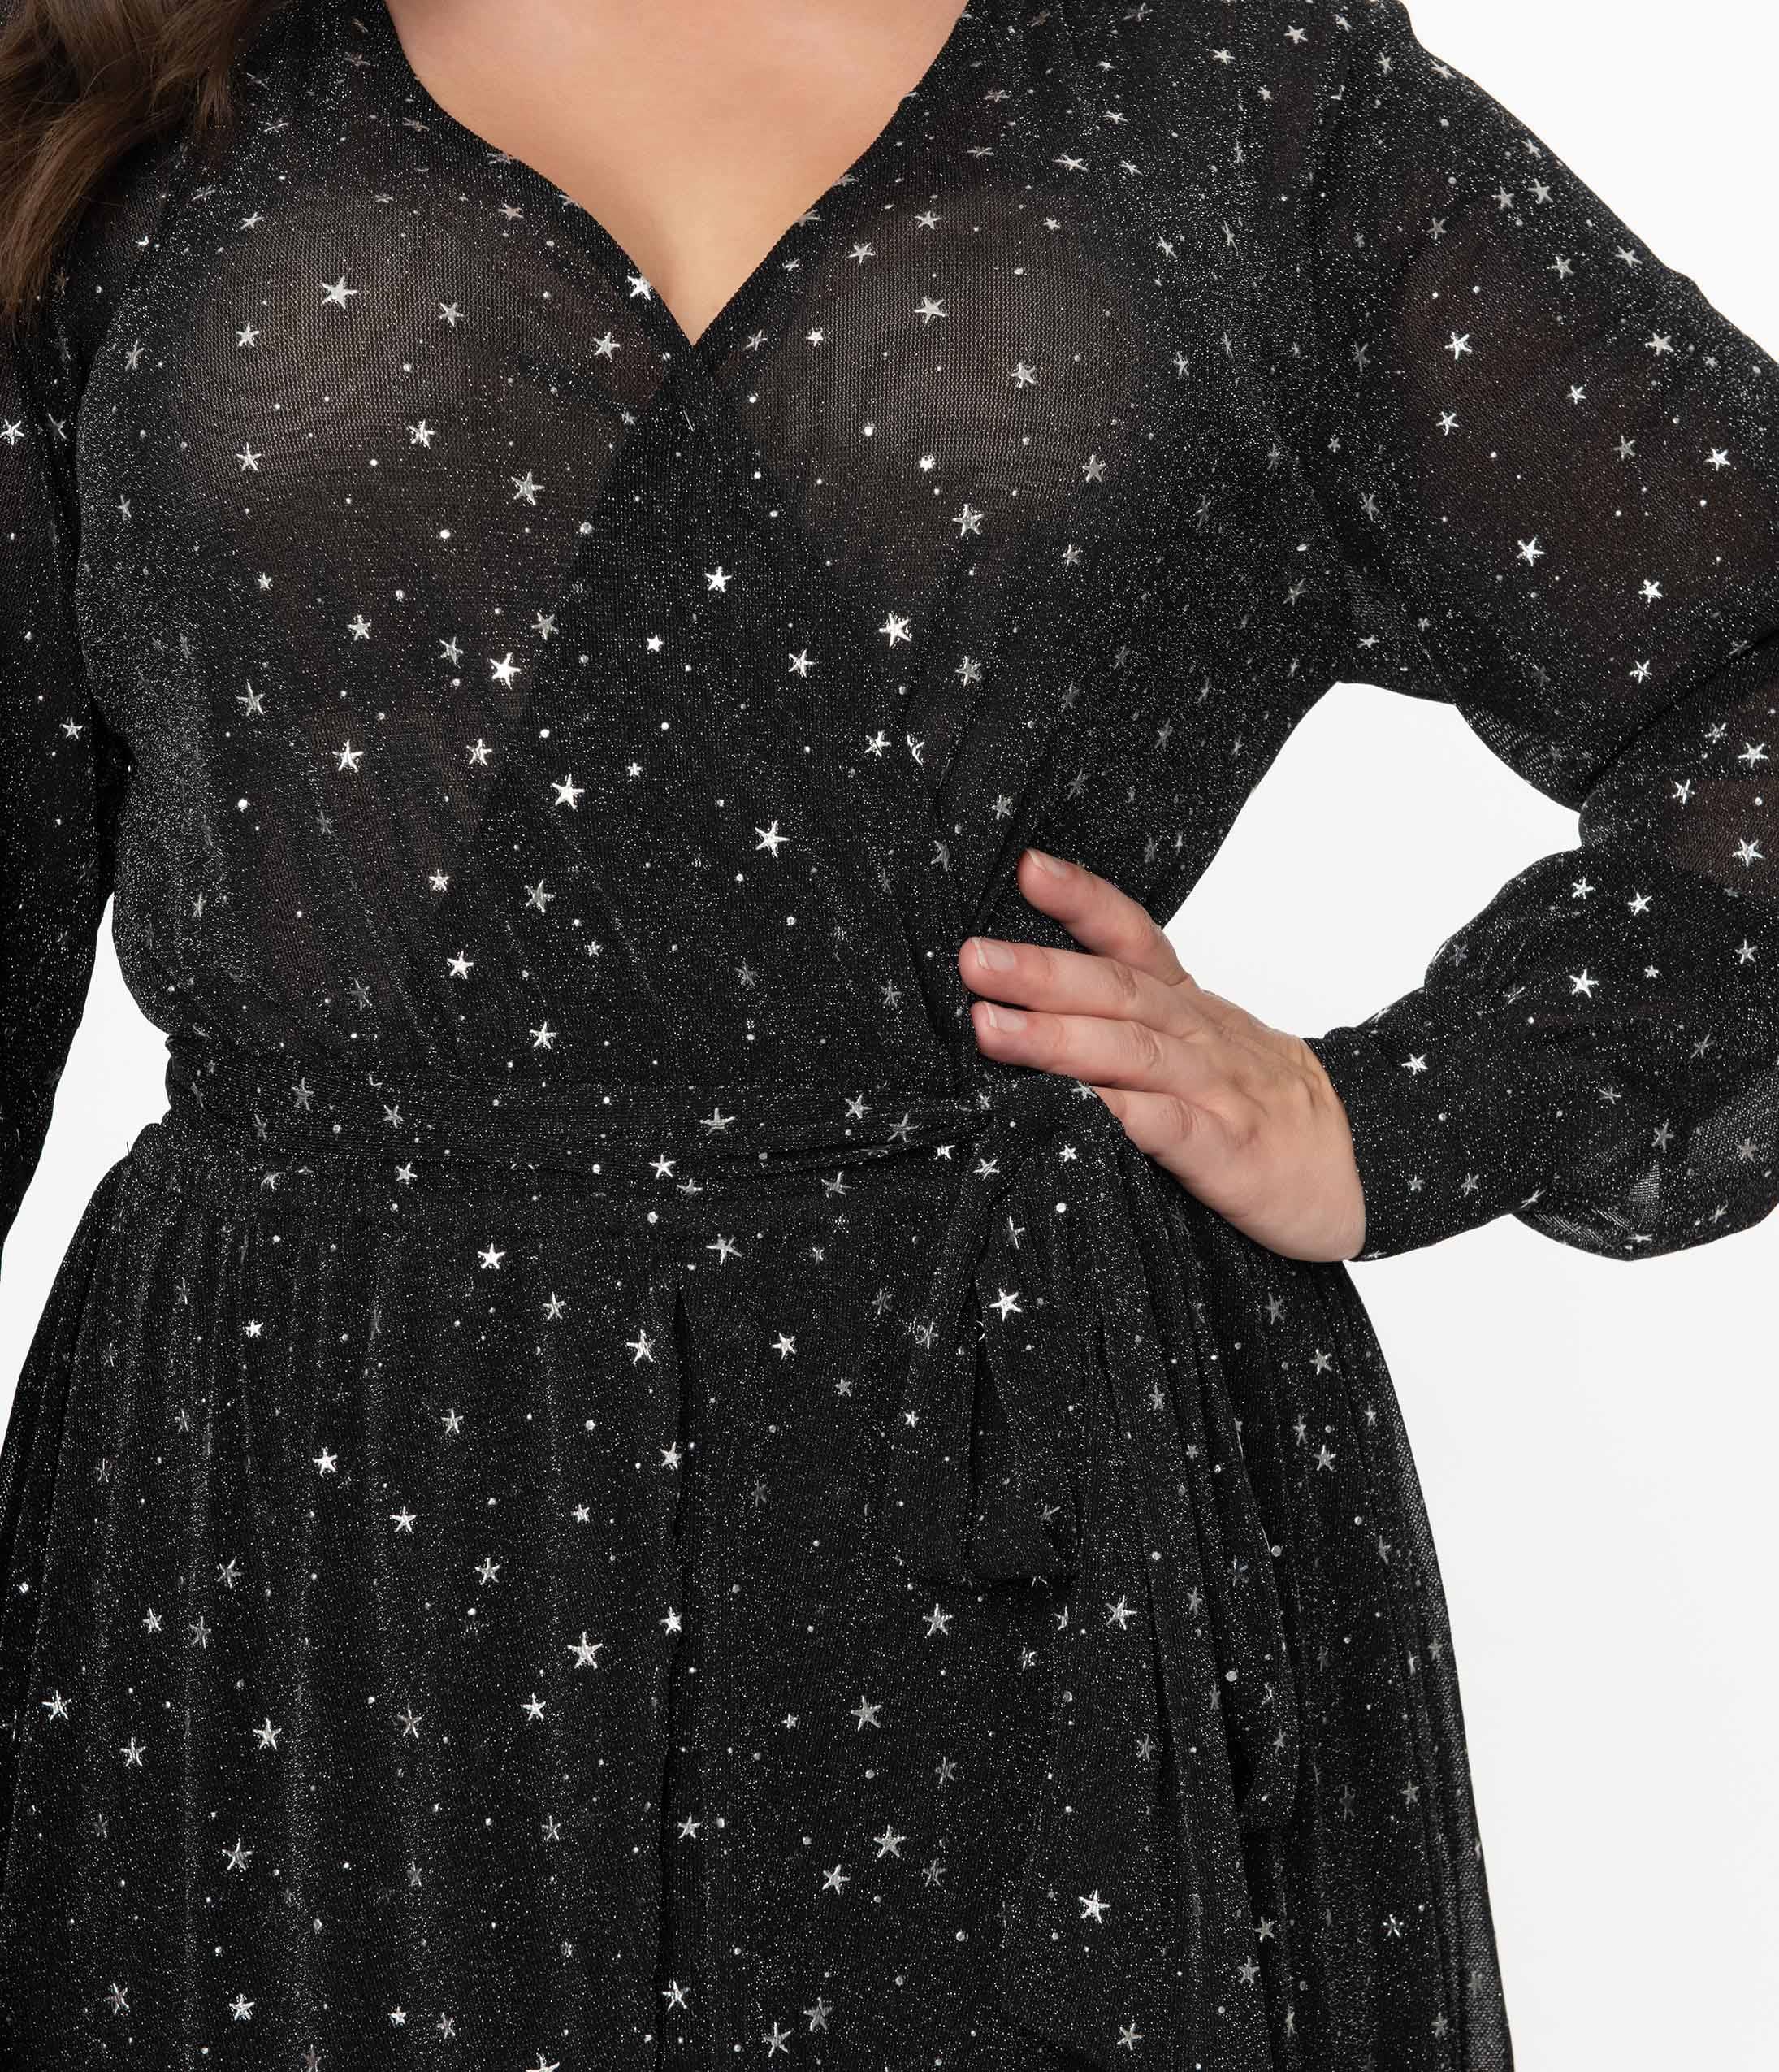 long black dress with stars